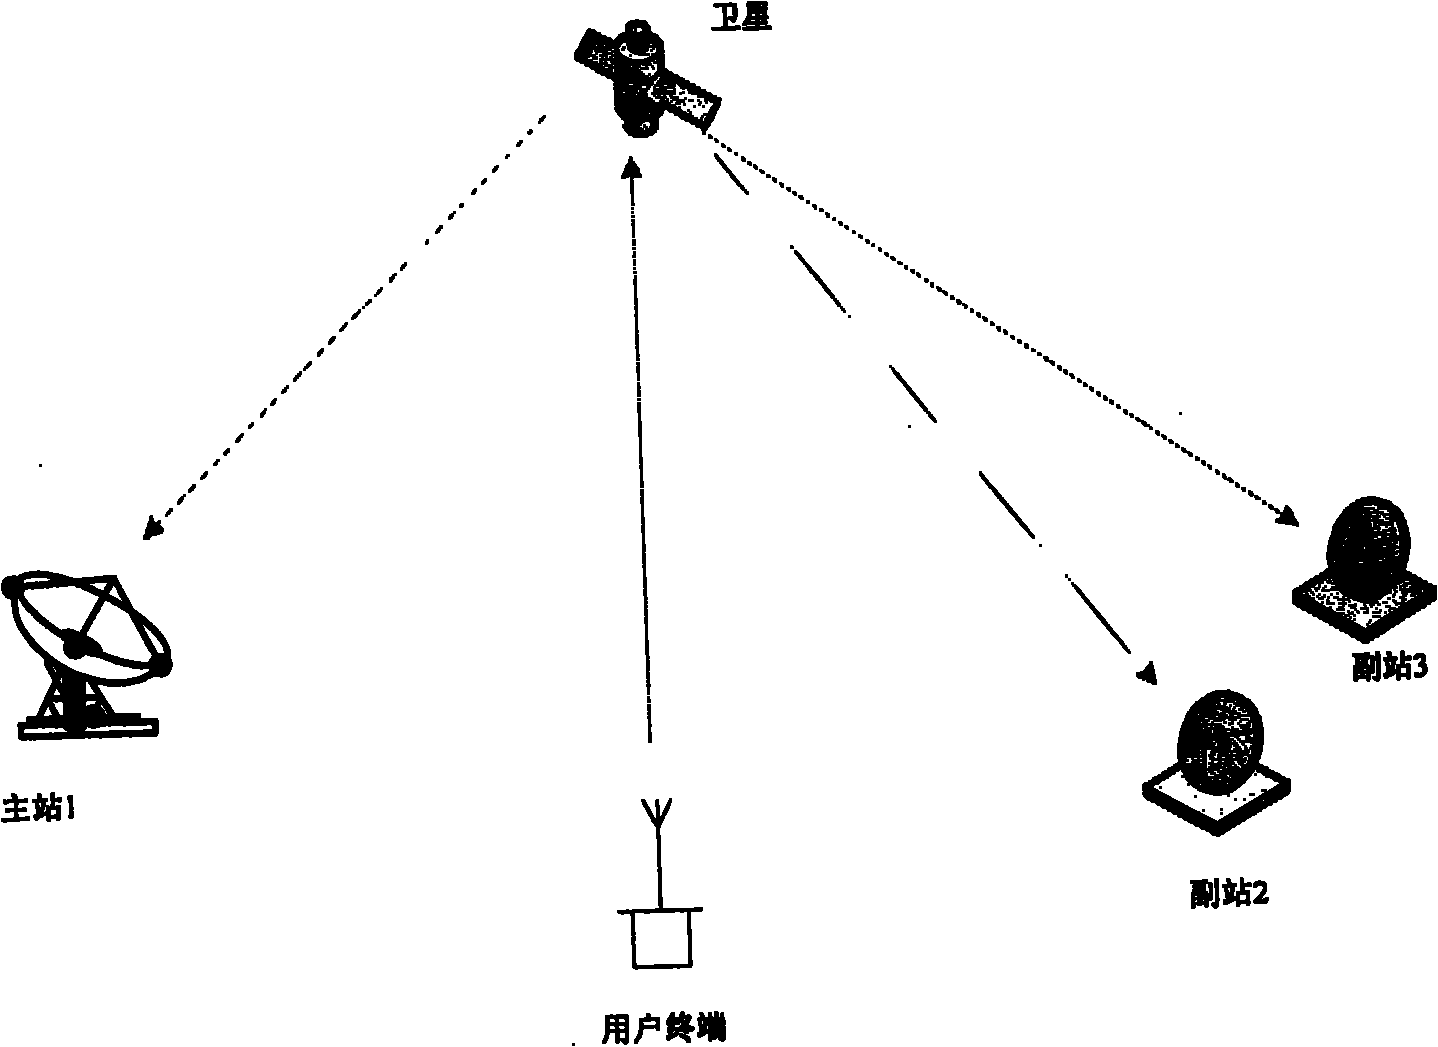 Bidirectional satellite navigation and communication positioning method and system